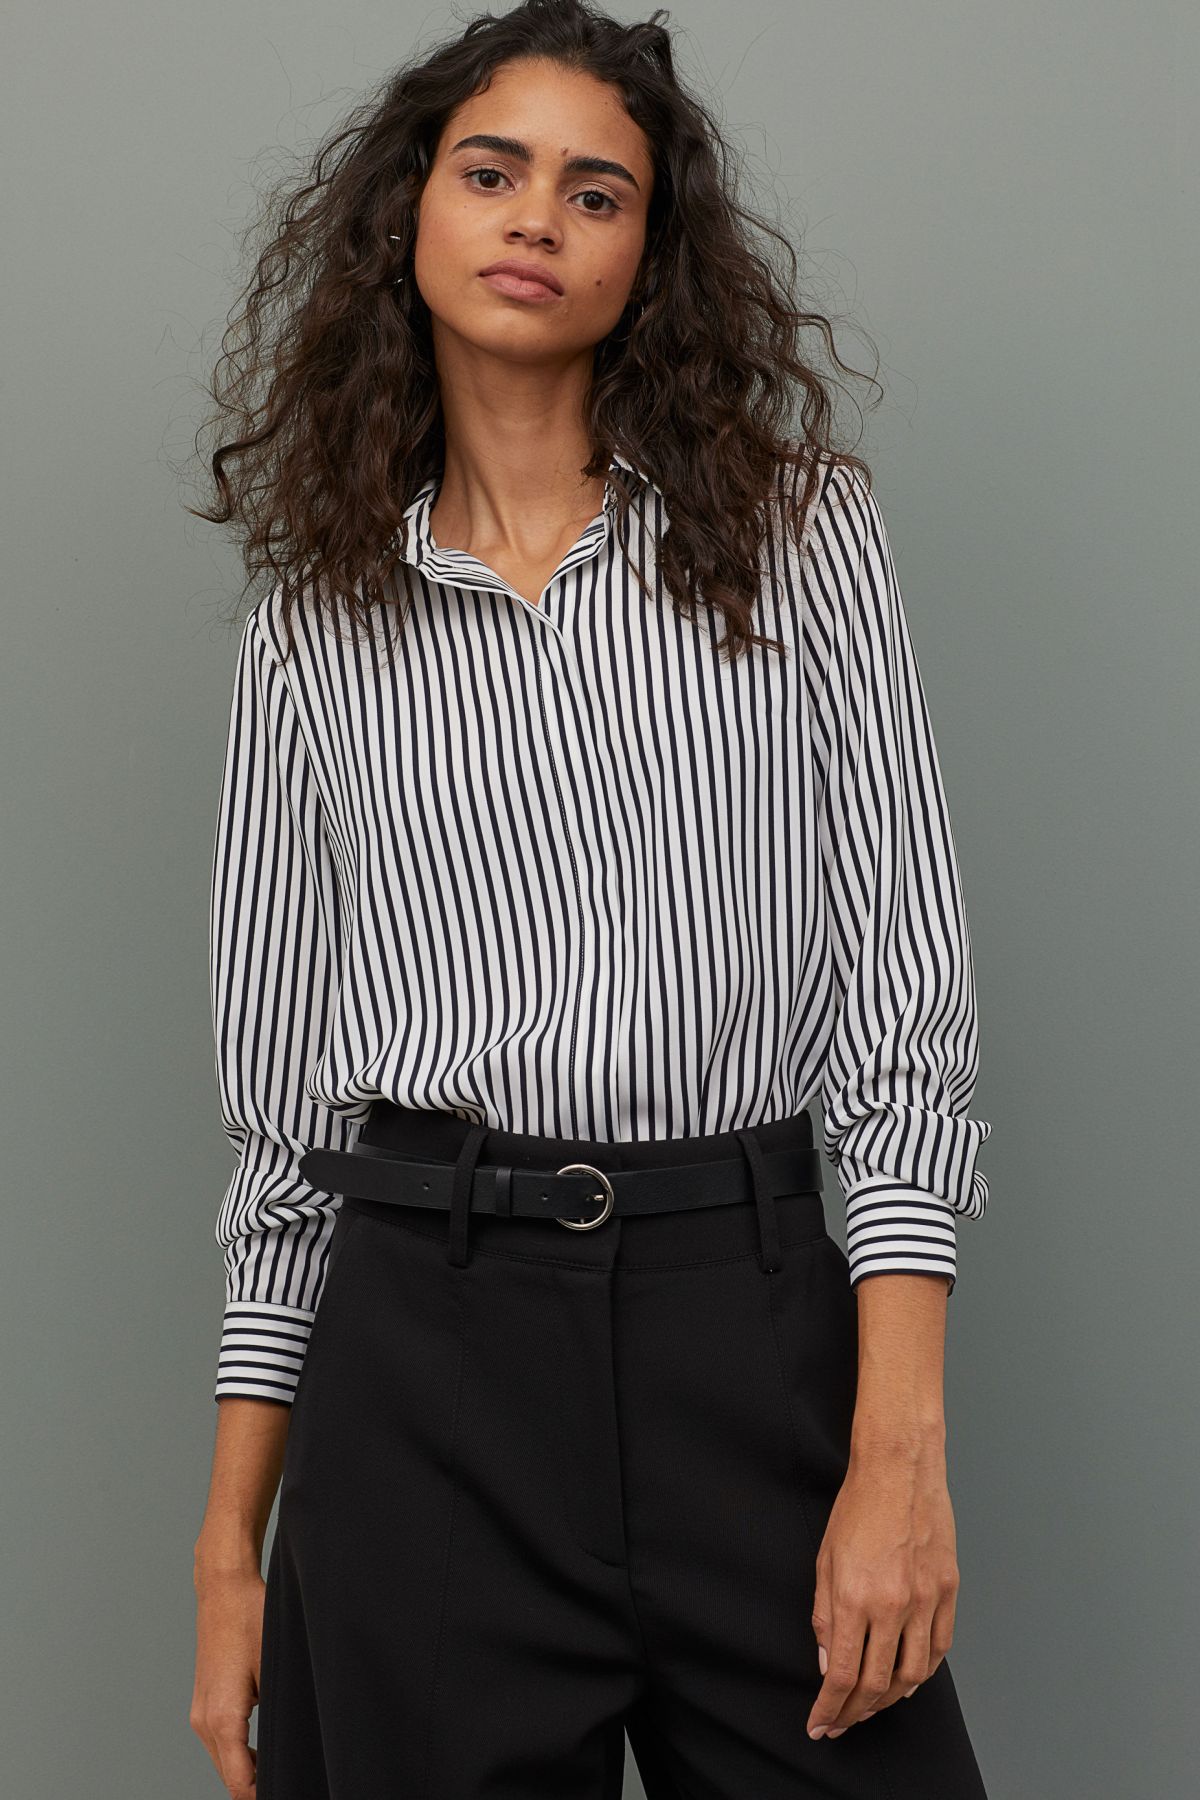 MARIANA SANTANA for H&M, December 2019 – HawtCelebs